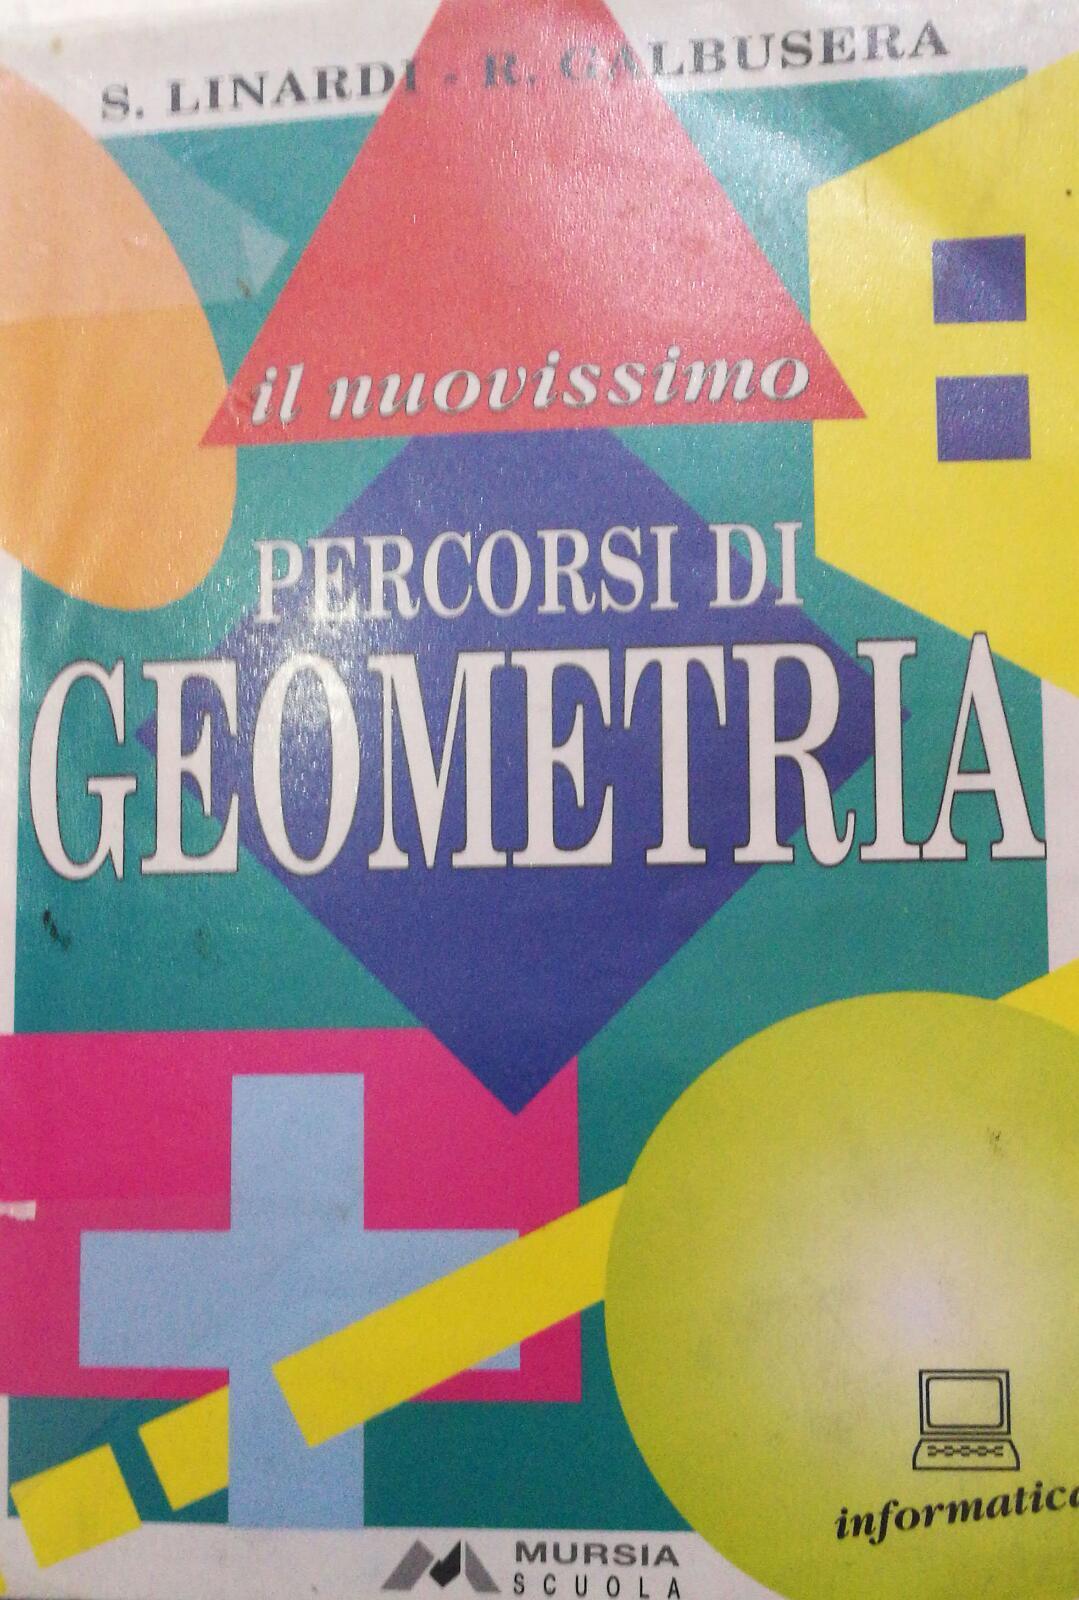 Percorsi di geometria - Linardi - Galbusera - 2003 - Mursia - lo